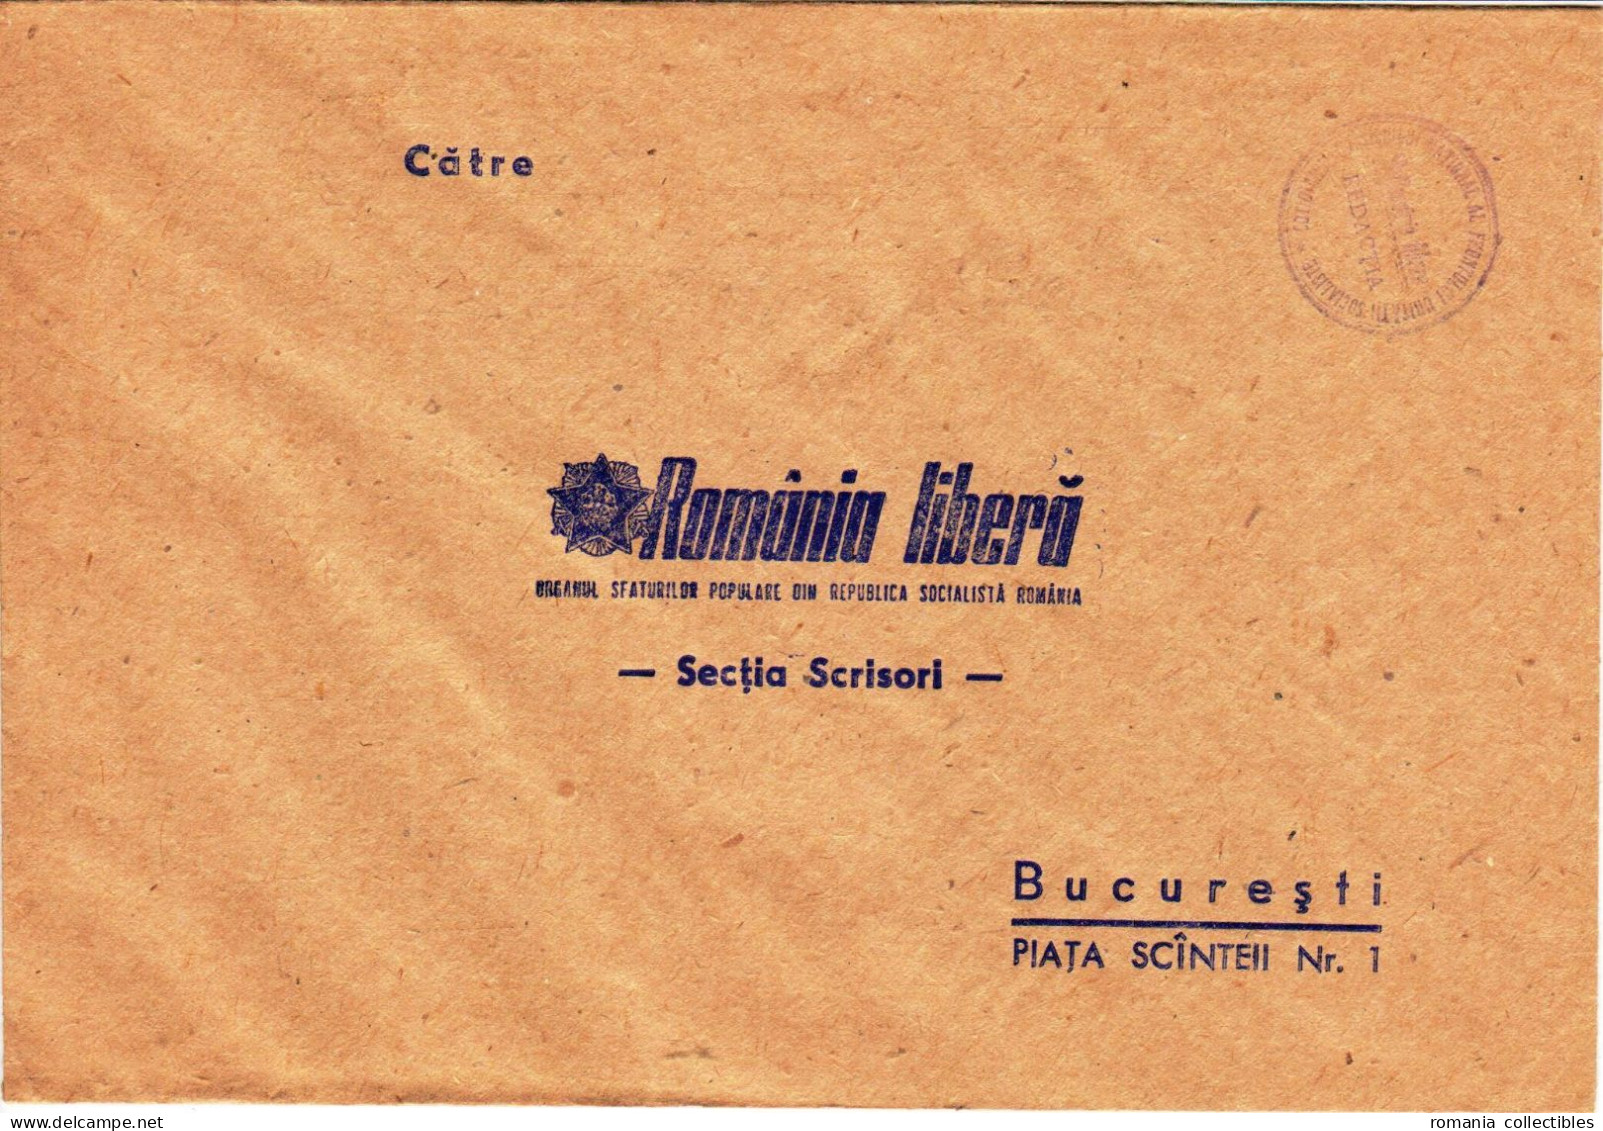 Romania, 1980's, Vintage Uncirculated Postal Cover  - "Romania Libera" Newspaper Advertising - Dienstzegels